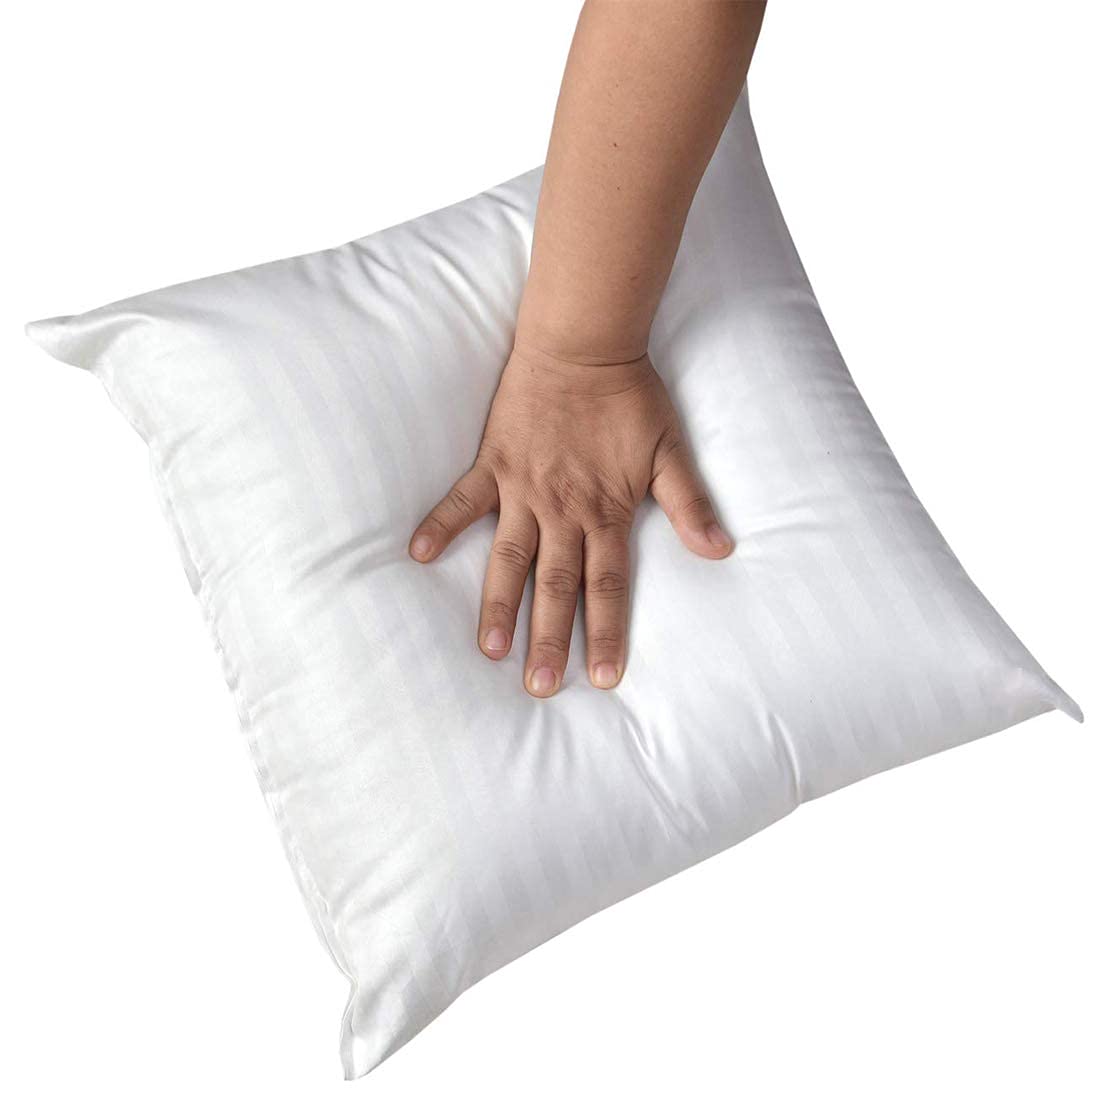 Cushion Filler White Cotton Satin Stripes Microfiber Fill